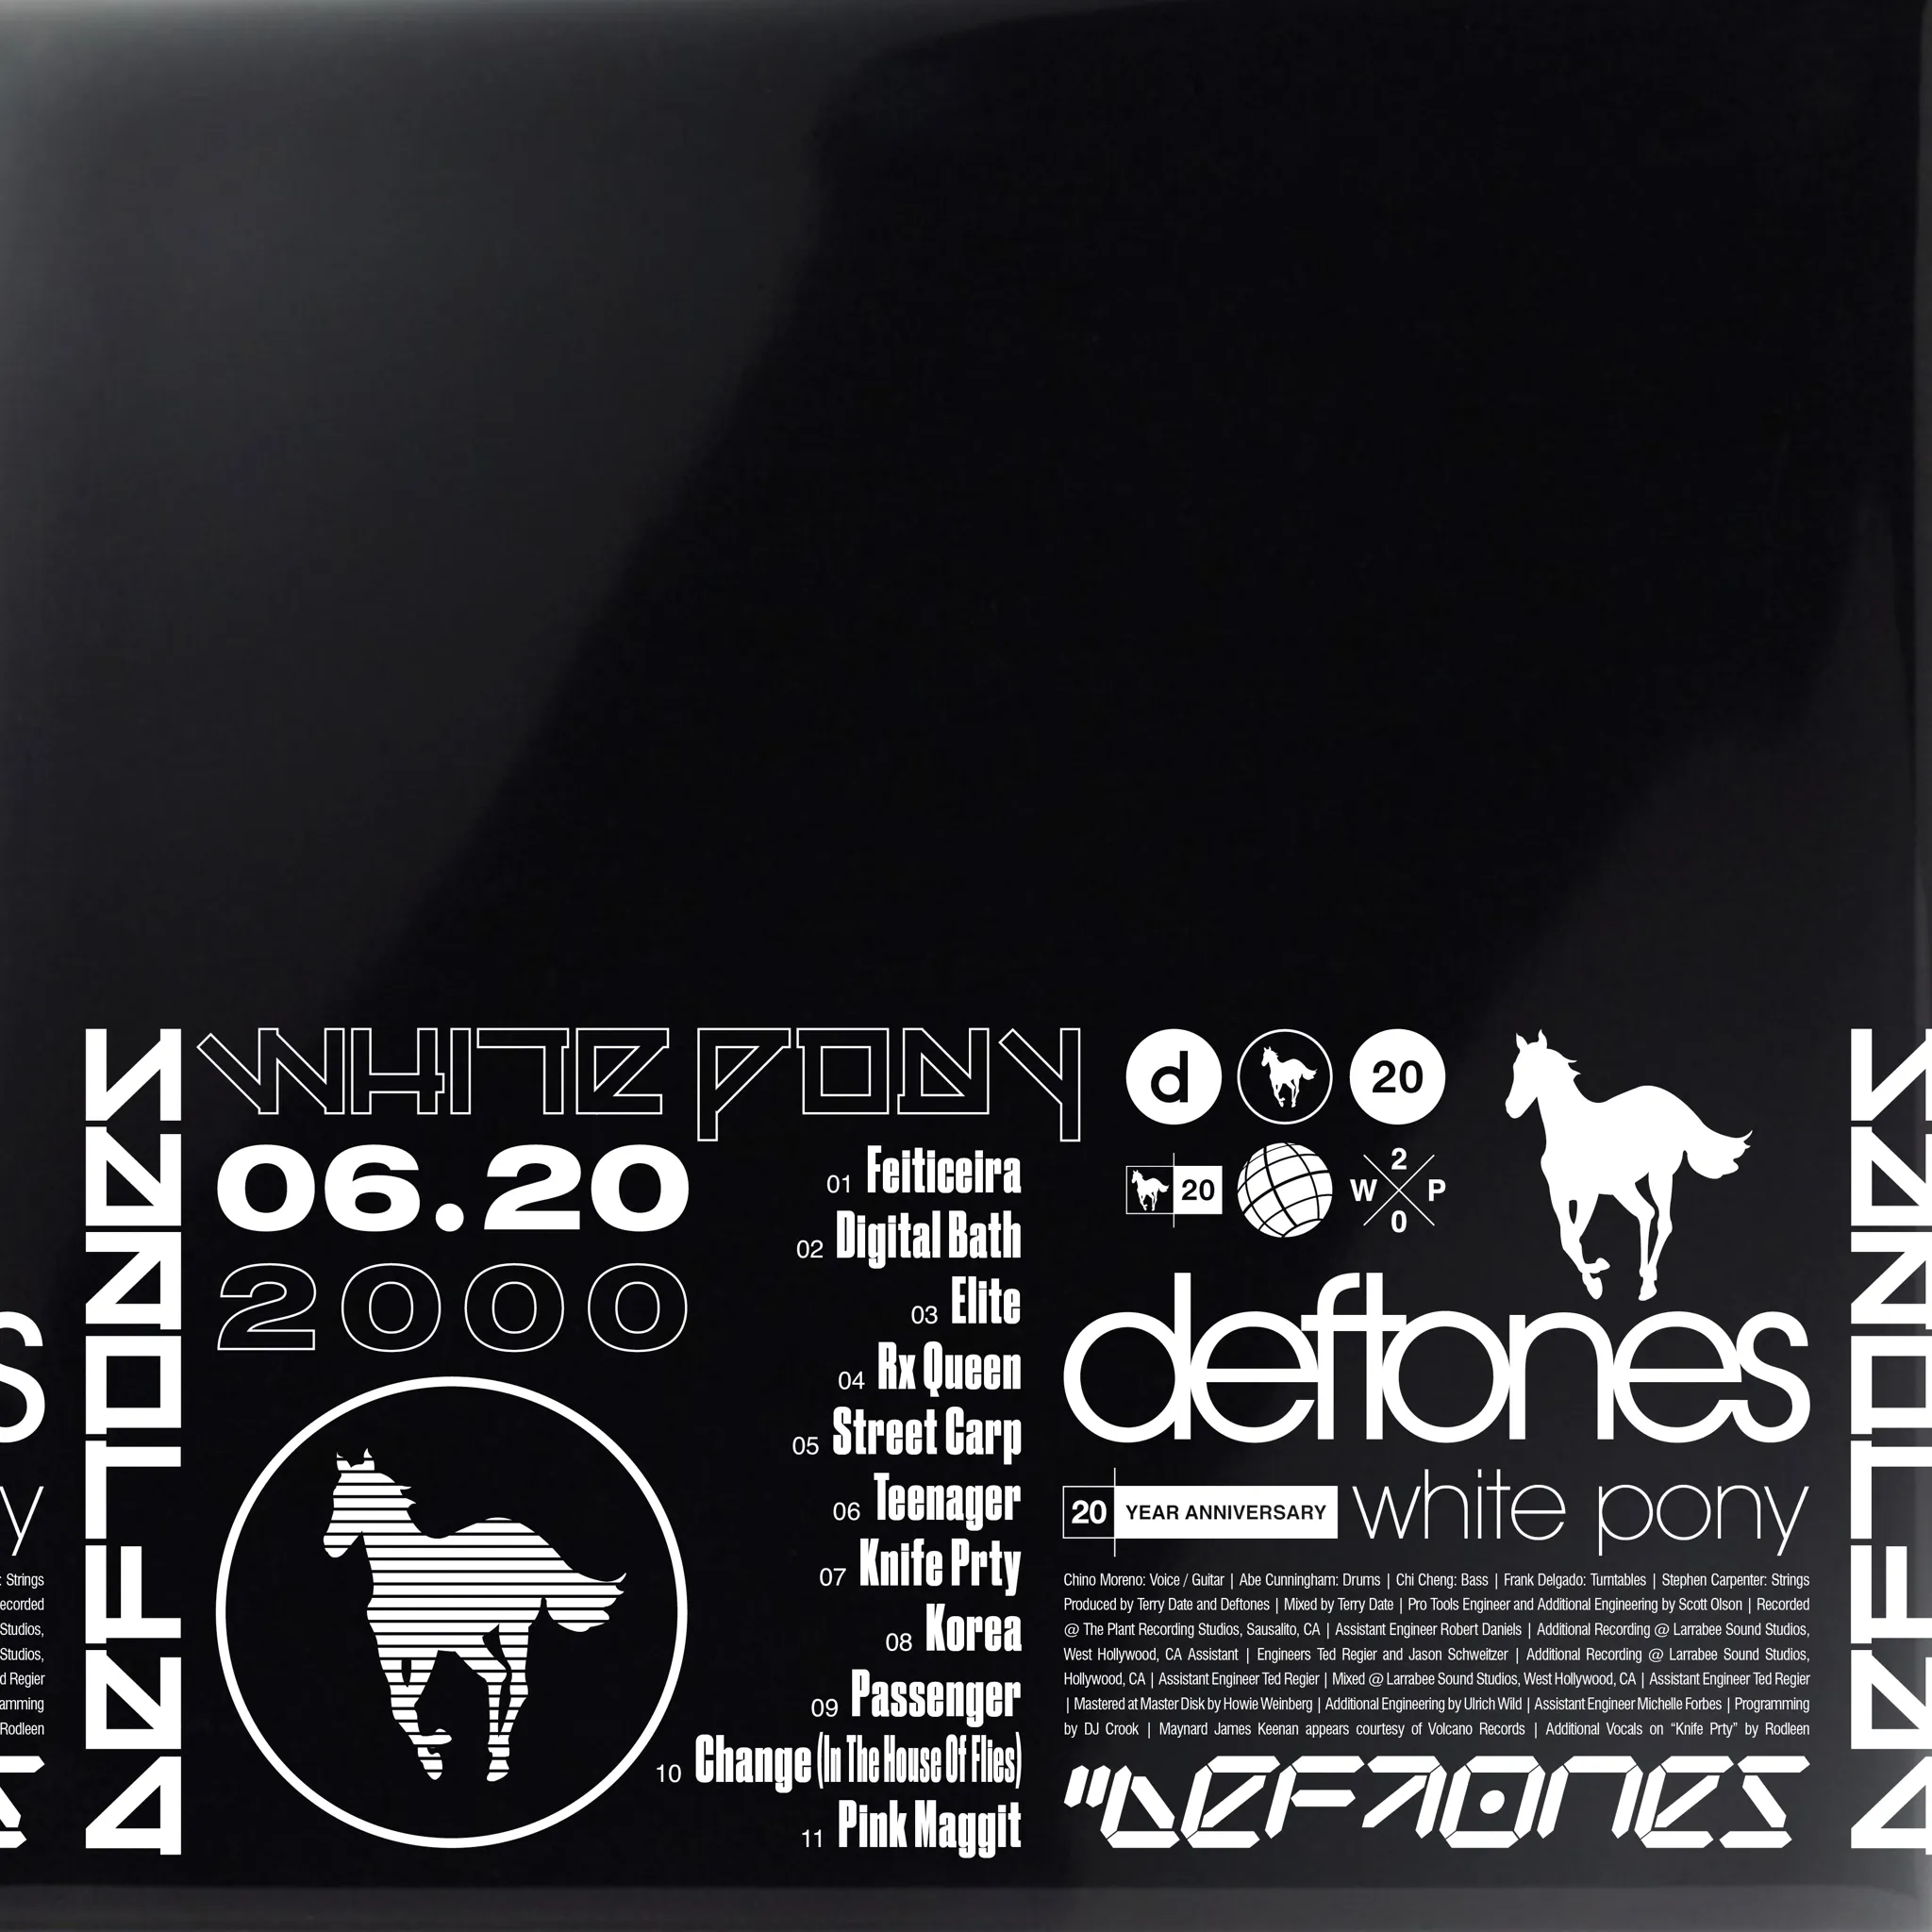 Deftones - White Pony (20th Anniversary) artwork